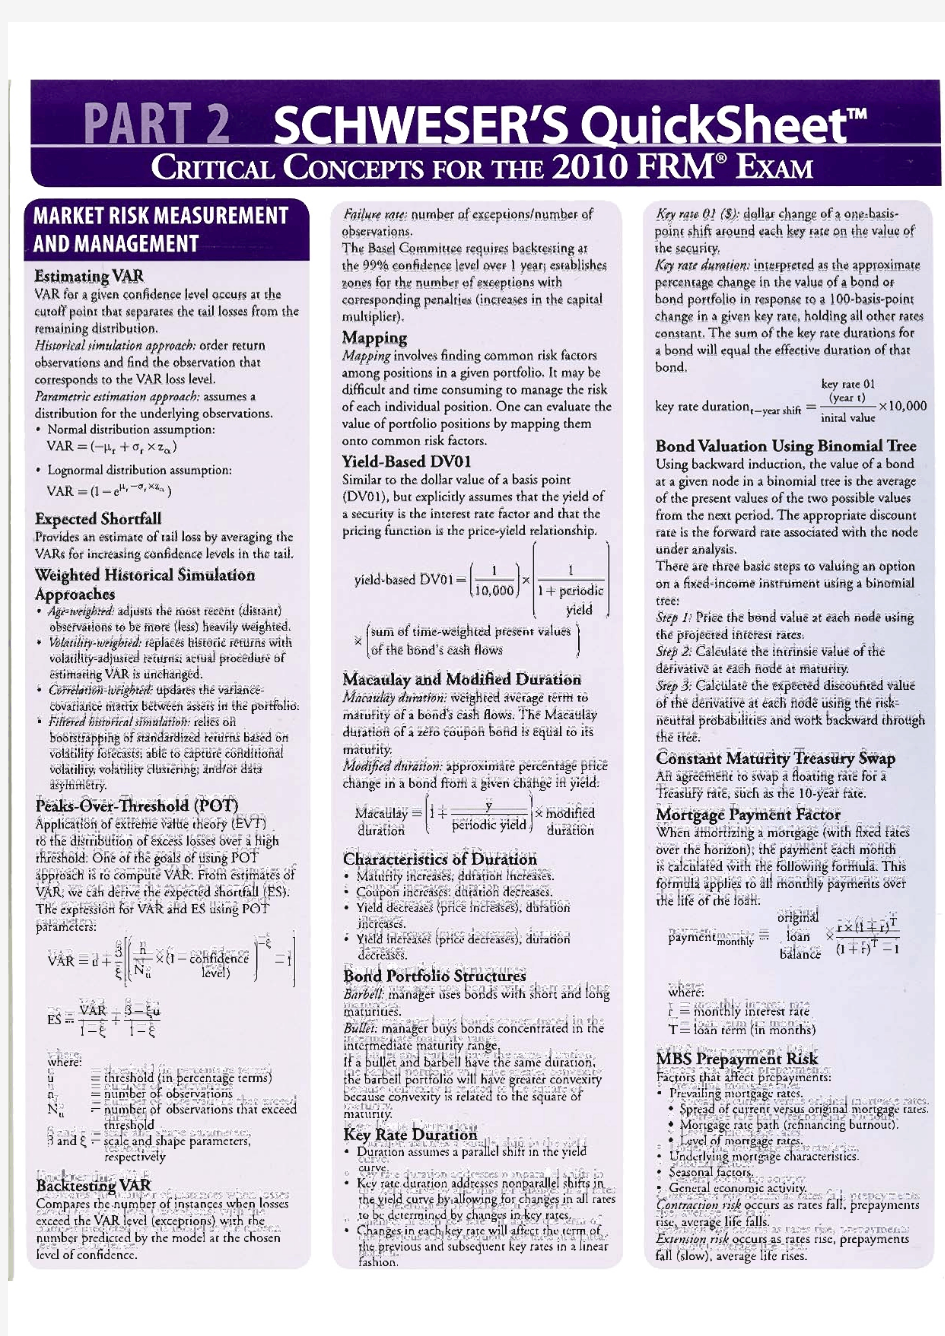 2010 Schweser FRM QuickSheet (Part 2)